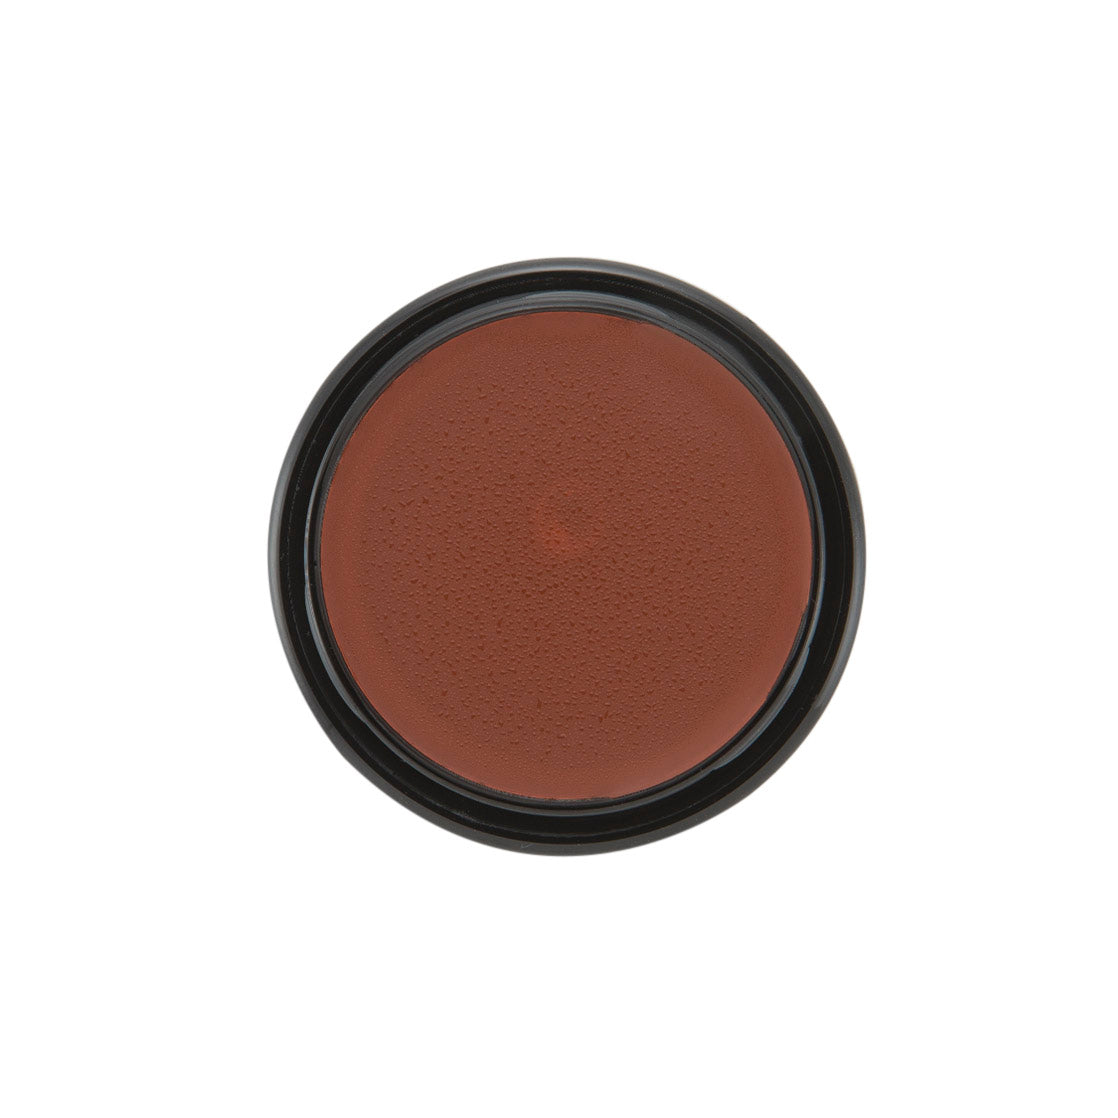 Ben Nye Lumiere Creme Palette, 18 Colors, Professional Quality Cosmetics